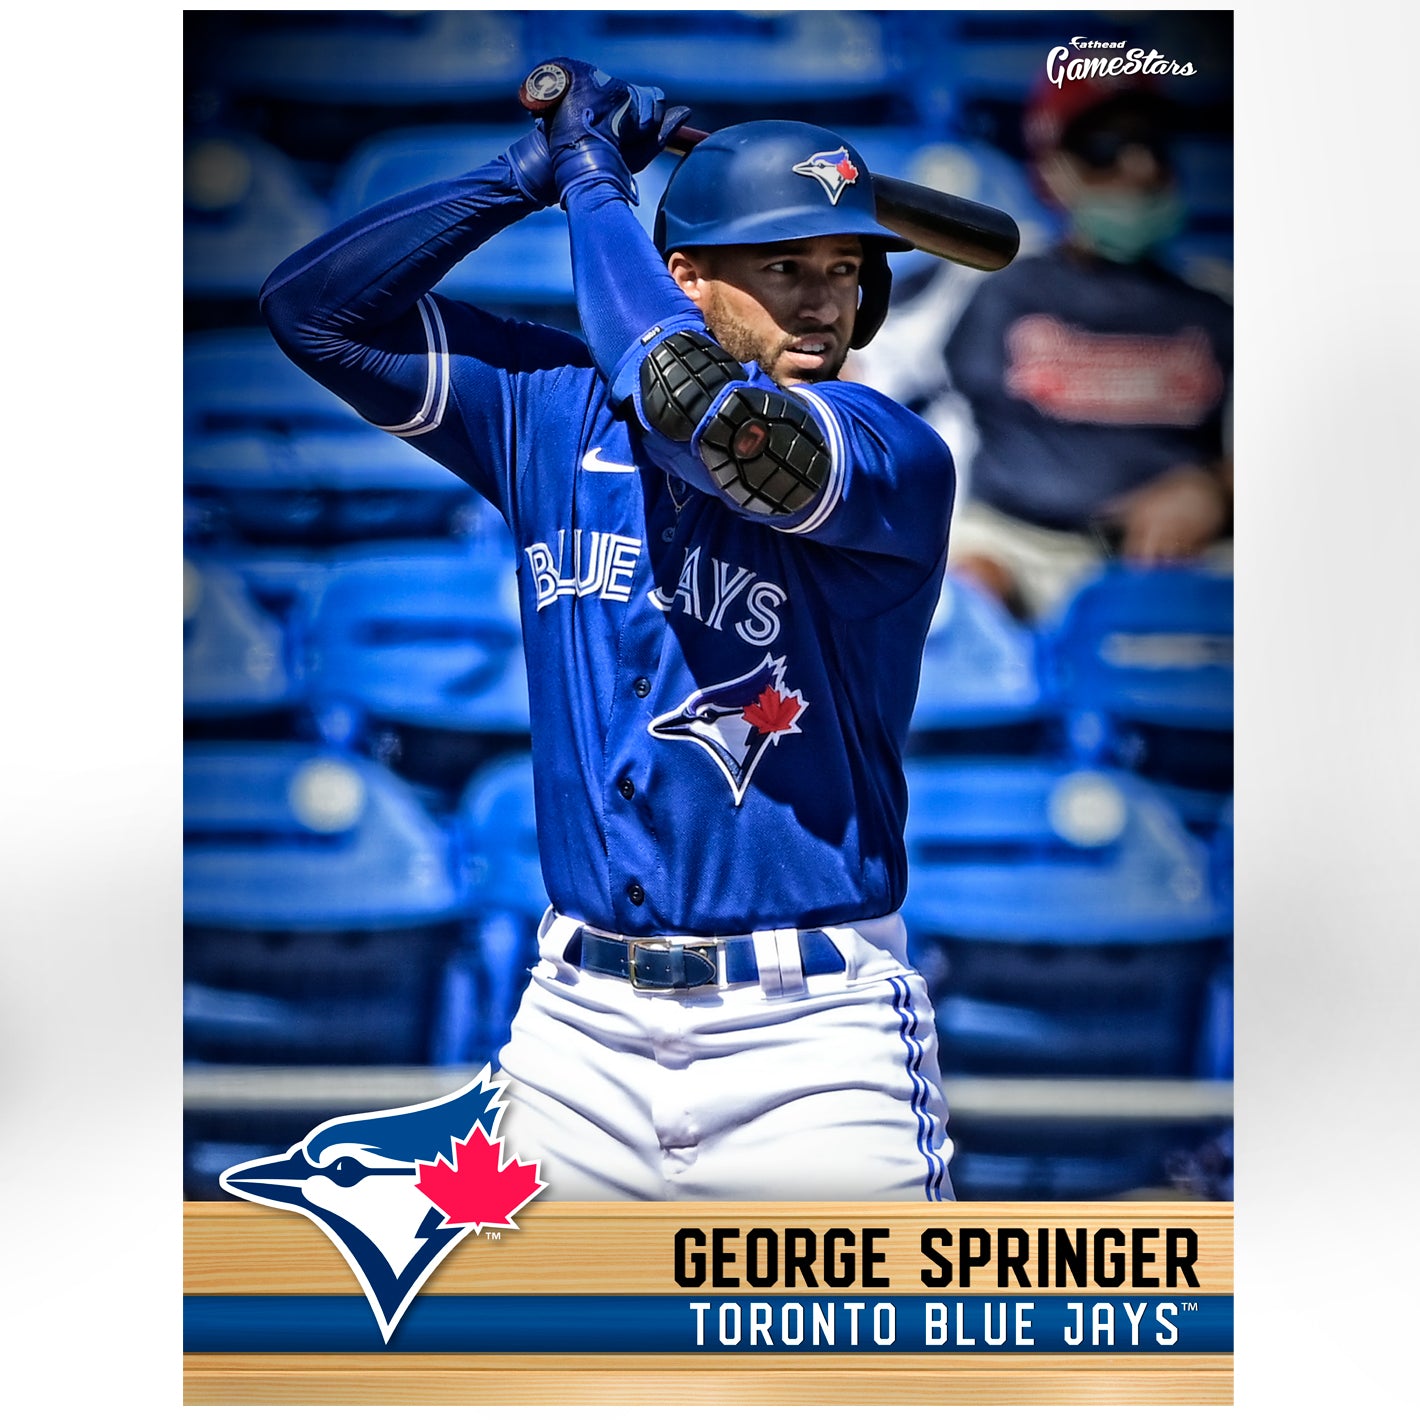 May 20, 2022, Toronto, ON, Canada: Toronto Blue Jays' George